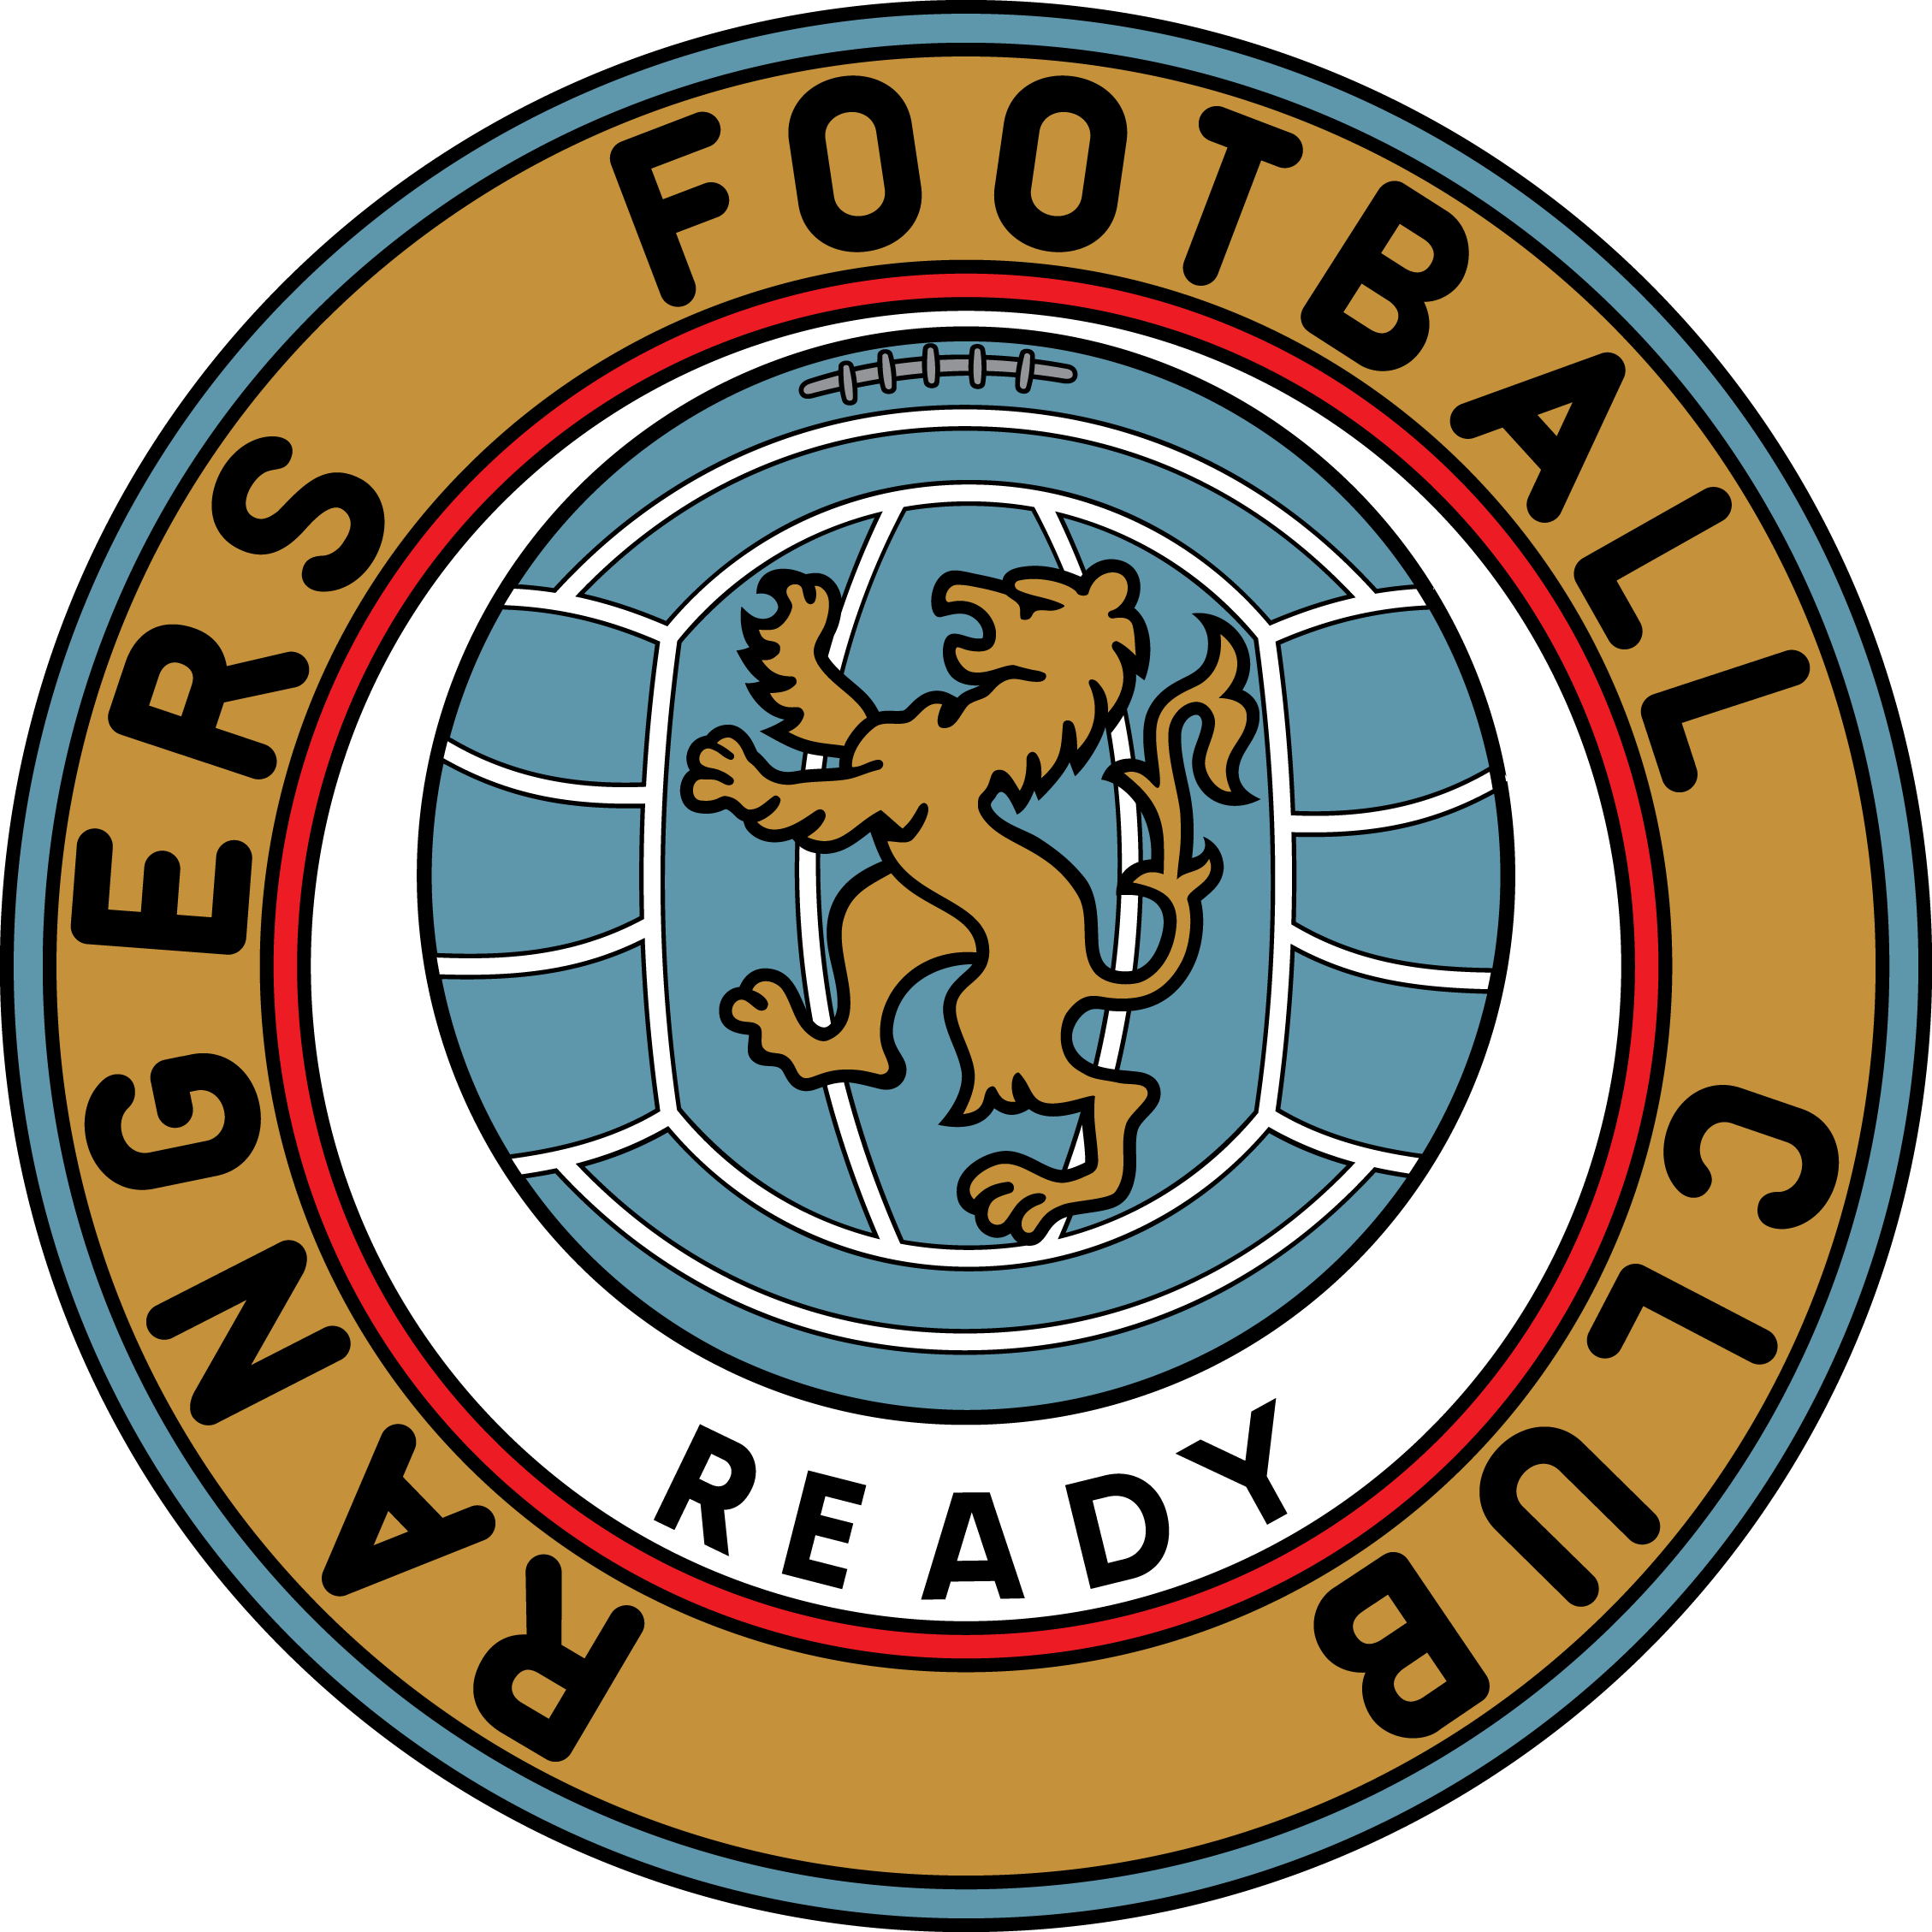 Rangers Fc - Glasgow Rangers (2258x2258)